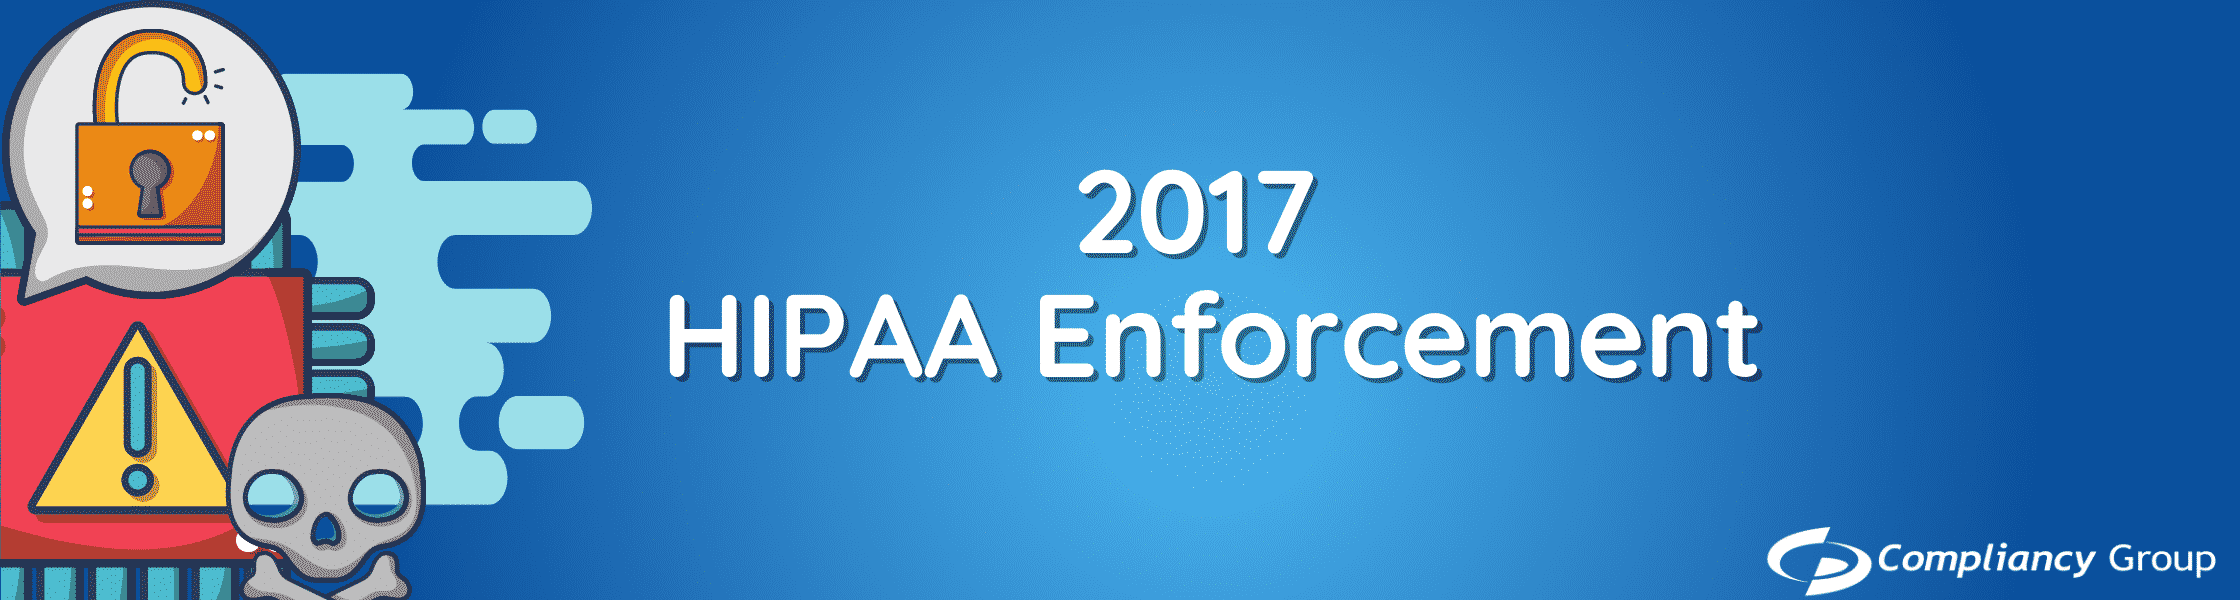 2017 HIPAA Enforcement